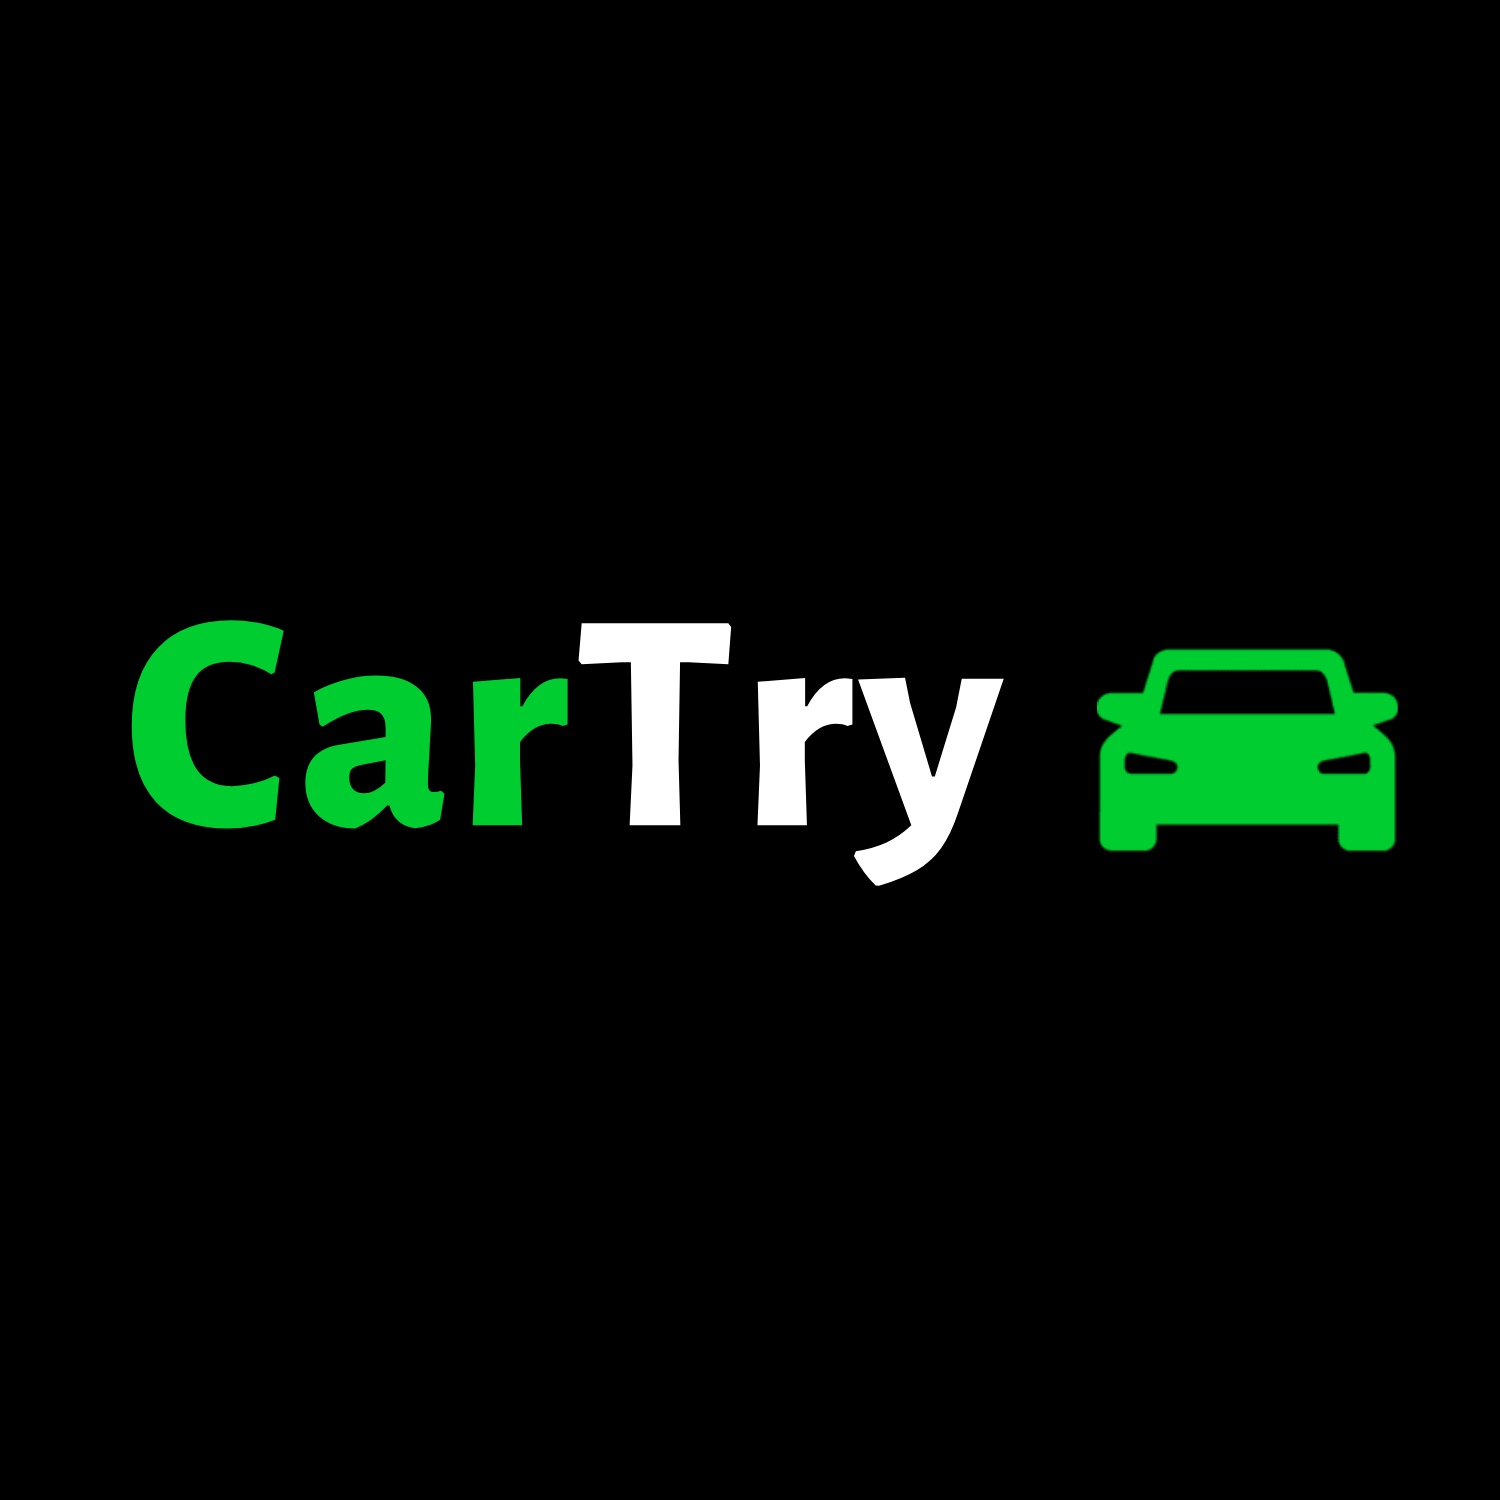 CarTry - Город Санкт-Петербург лого.png